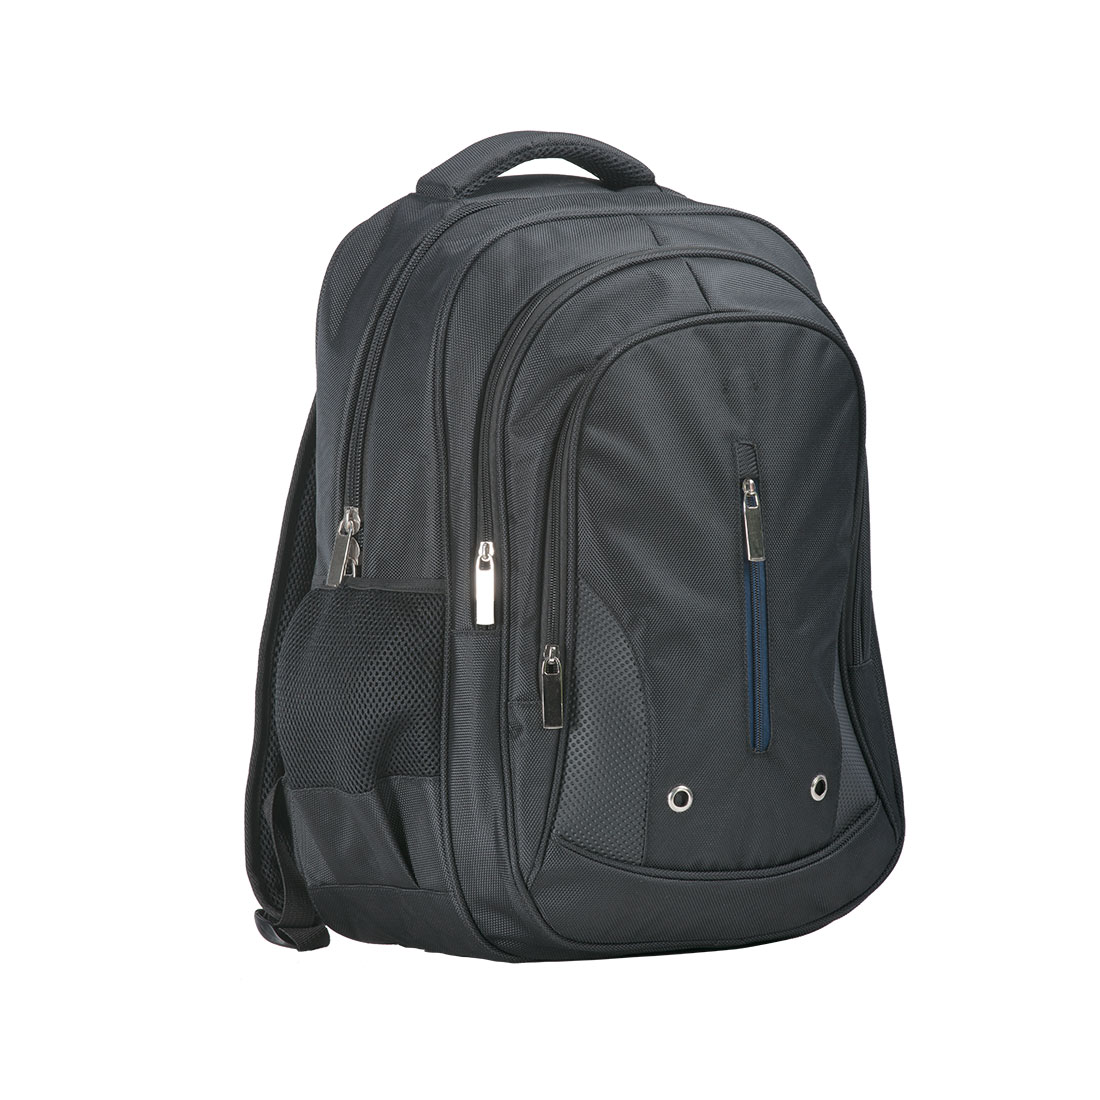 Triple Pocket Backpack B916